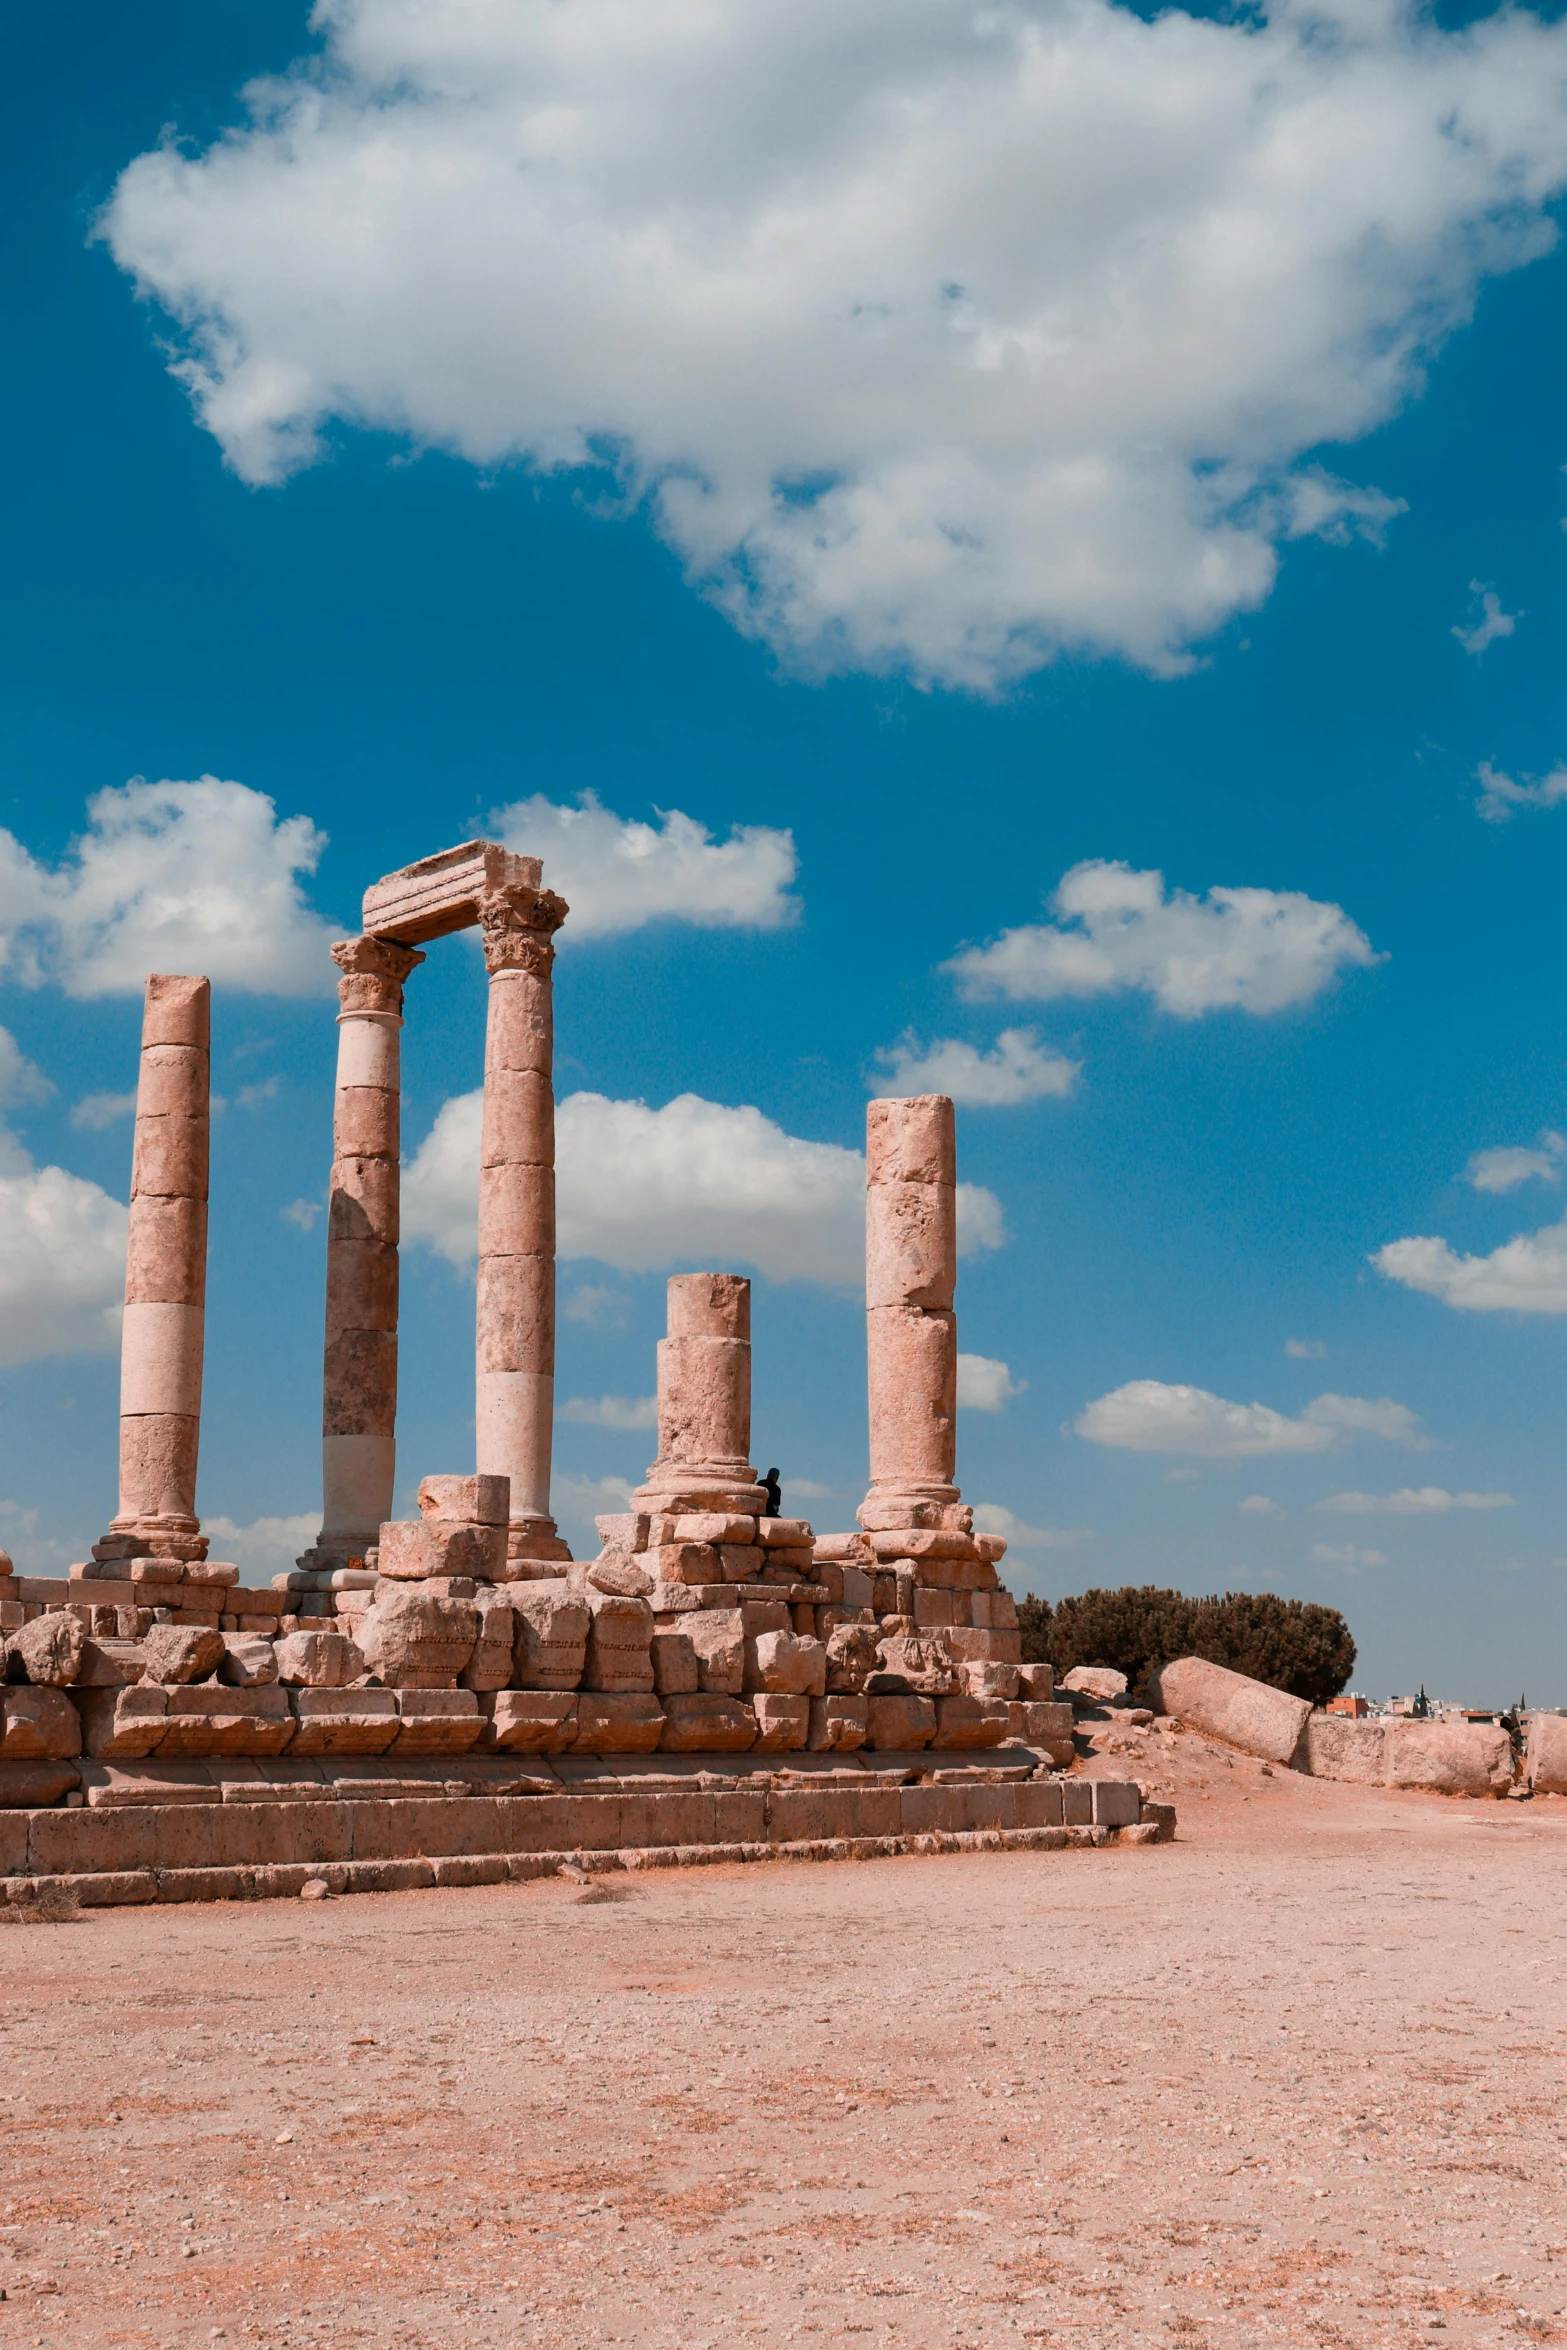 a group of pillars sitting on top of a dirt field, a marble sculpture, pexels contest winner, neoclassicism, blue skies, jordan, examining ruins, alexandria\'s genesis